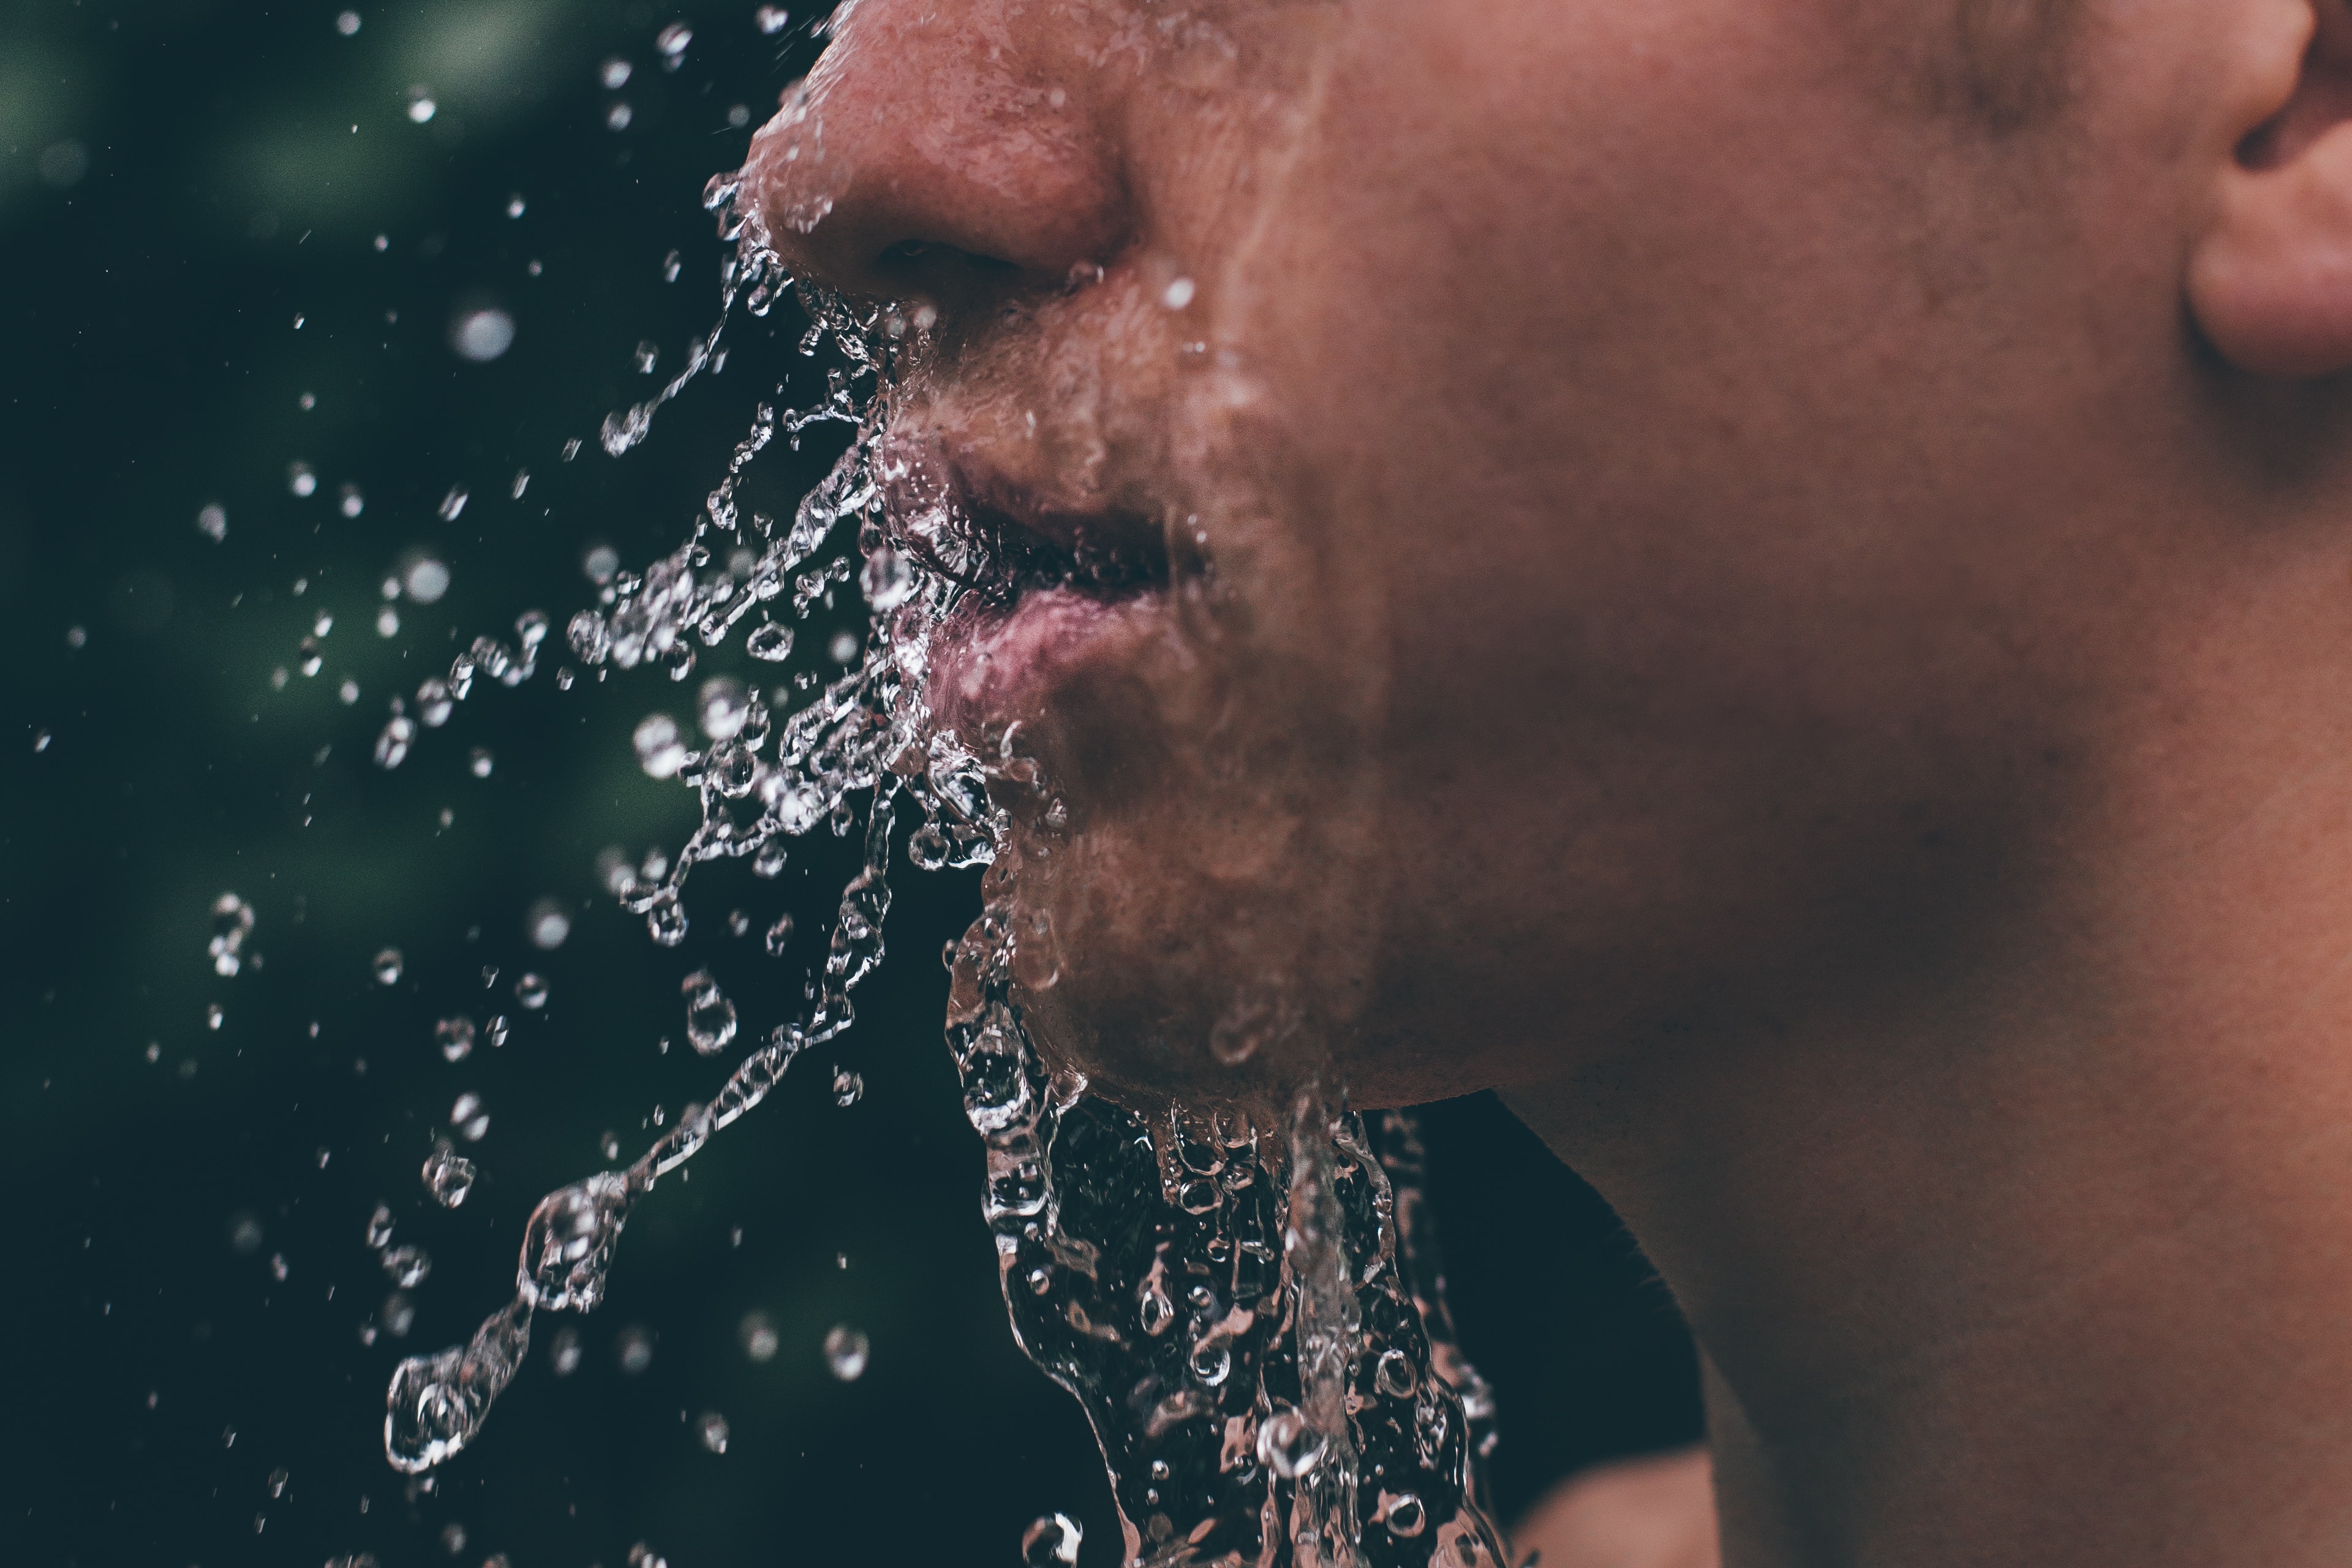 Man splashing water on his face; image by Lucas Sankey, via Unsplash.com.